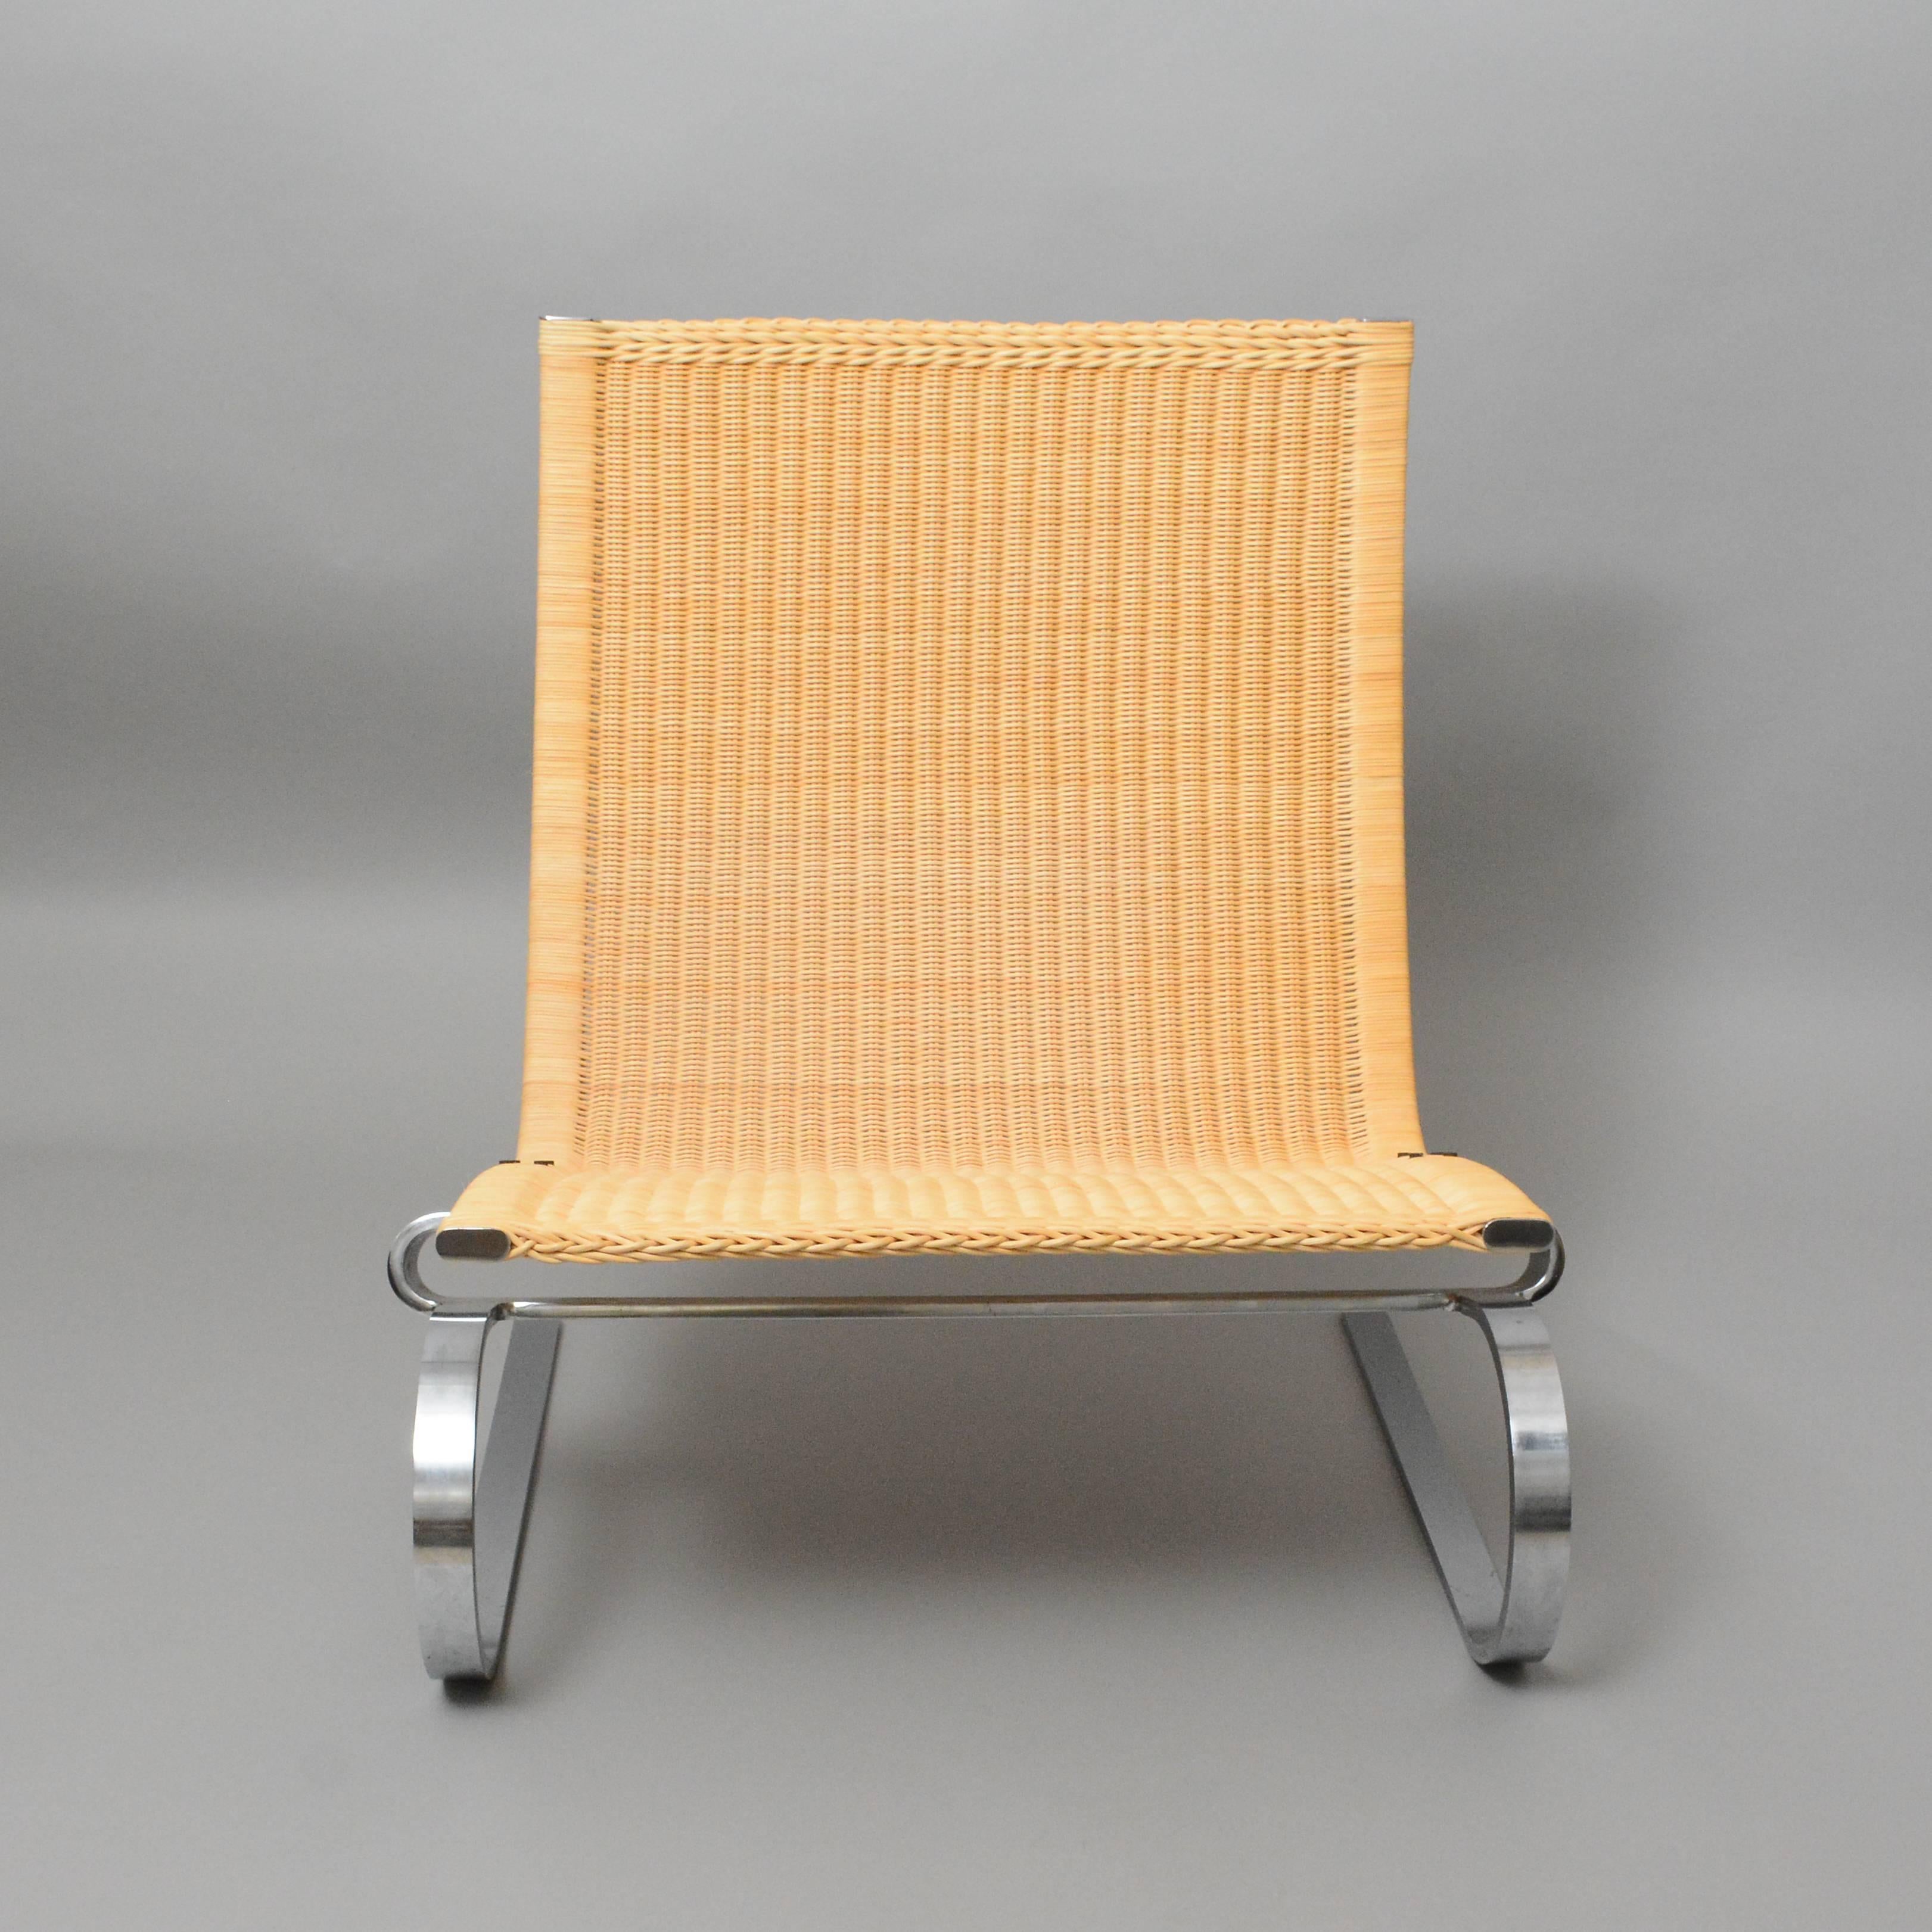 PK20 lounge chair designed in 1967 by Poul Kjaerholm. Manufactured by E Kold Christensen, Hellerup, Denmark. Manufactured 1968-1980.